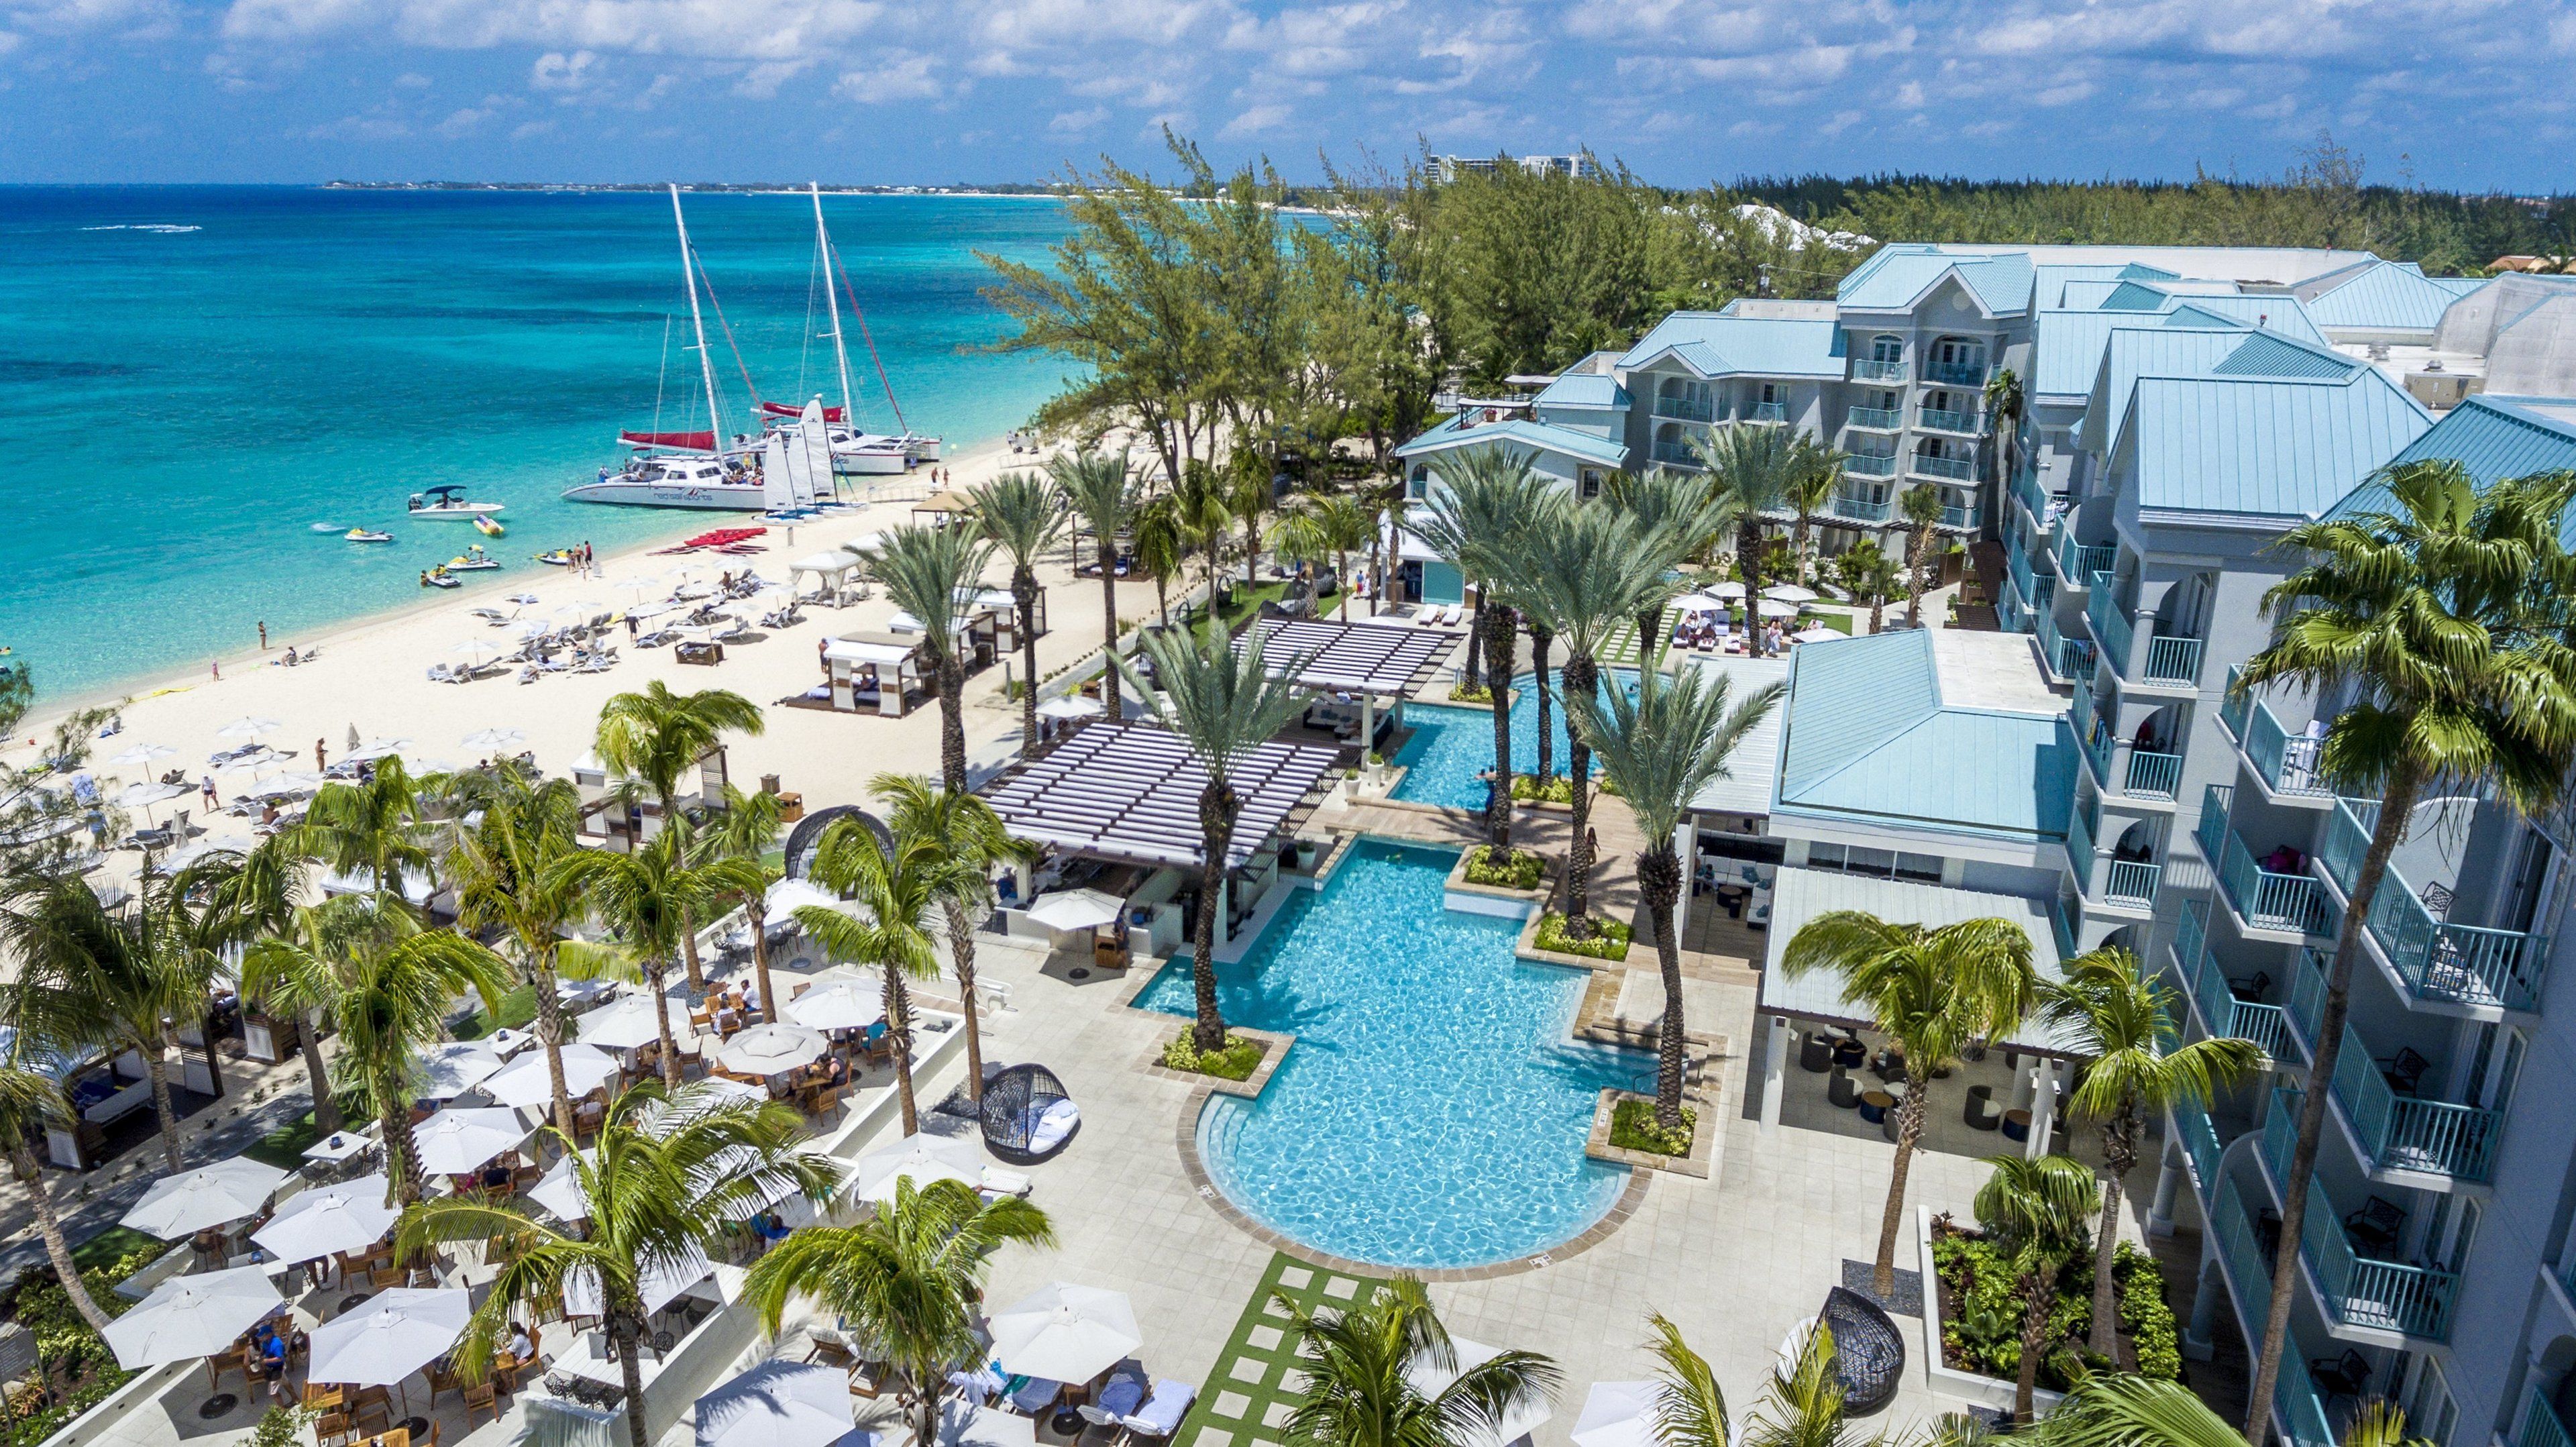 The Westin Grand Cayman Seven Mile Beach Resort & Spa Cayman Islands Cayman Islands thumbnail